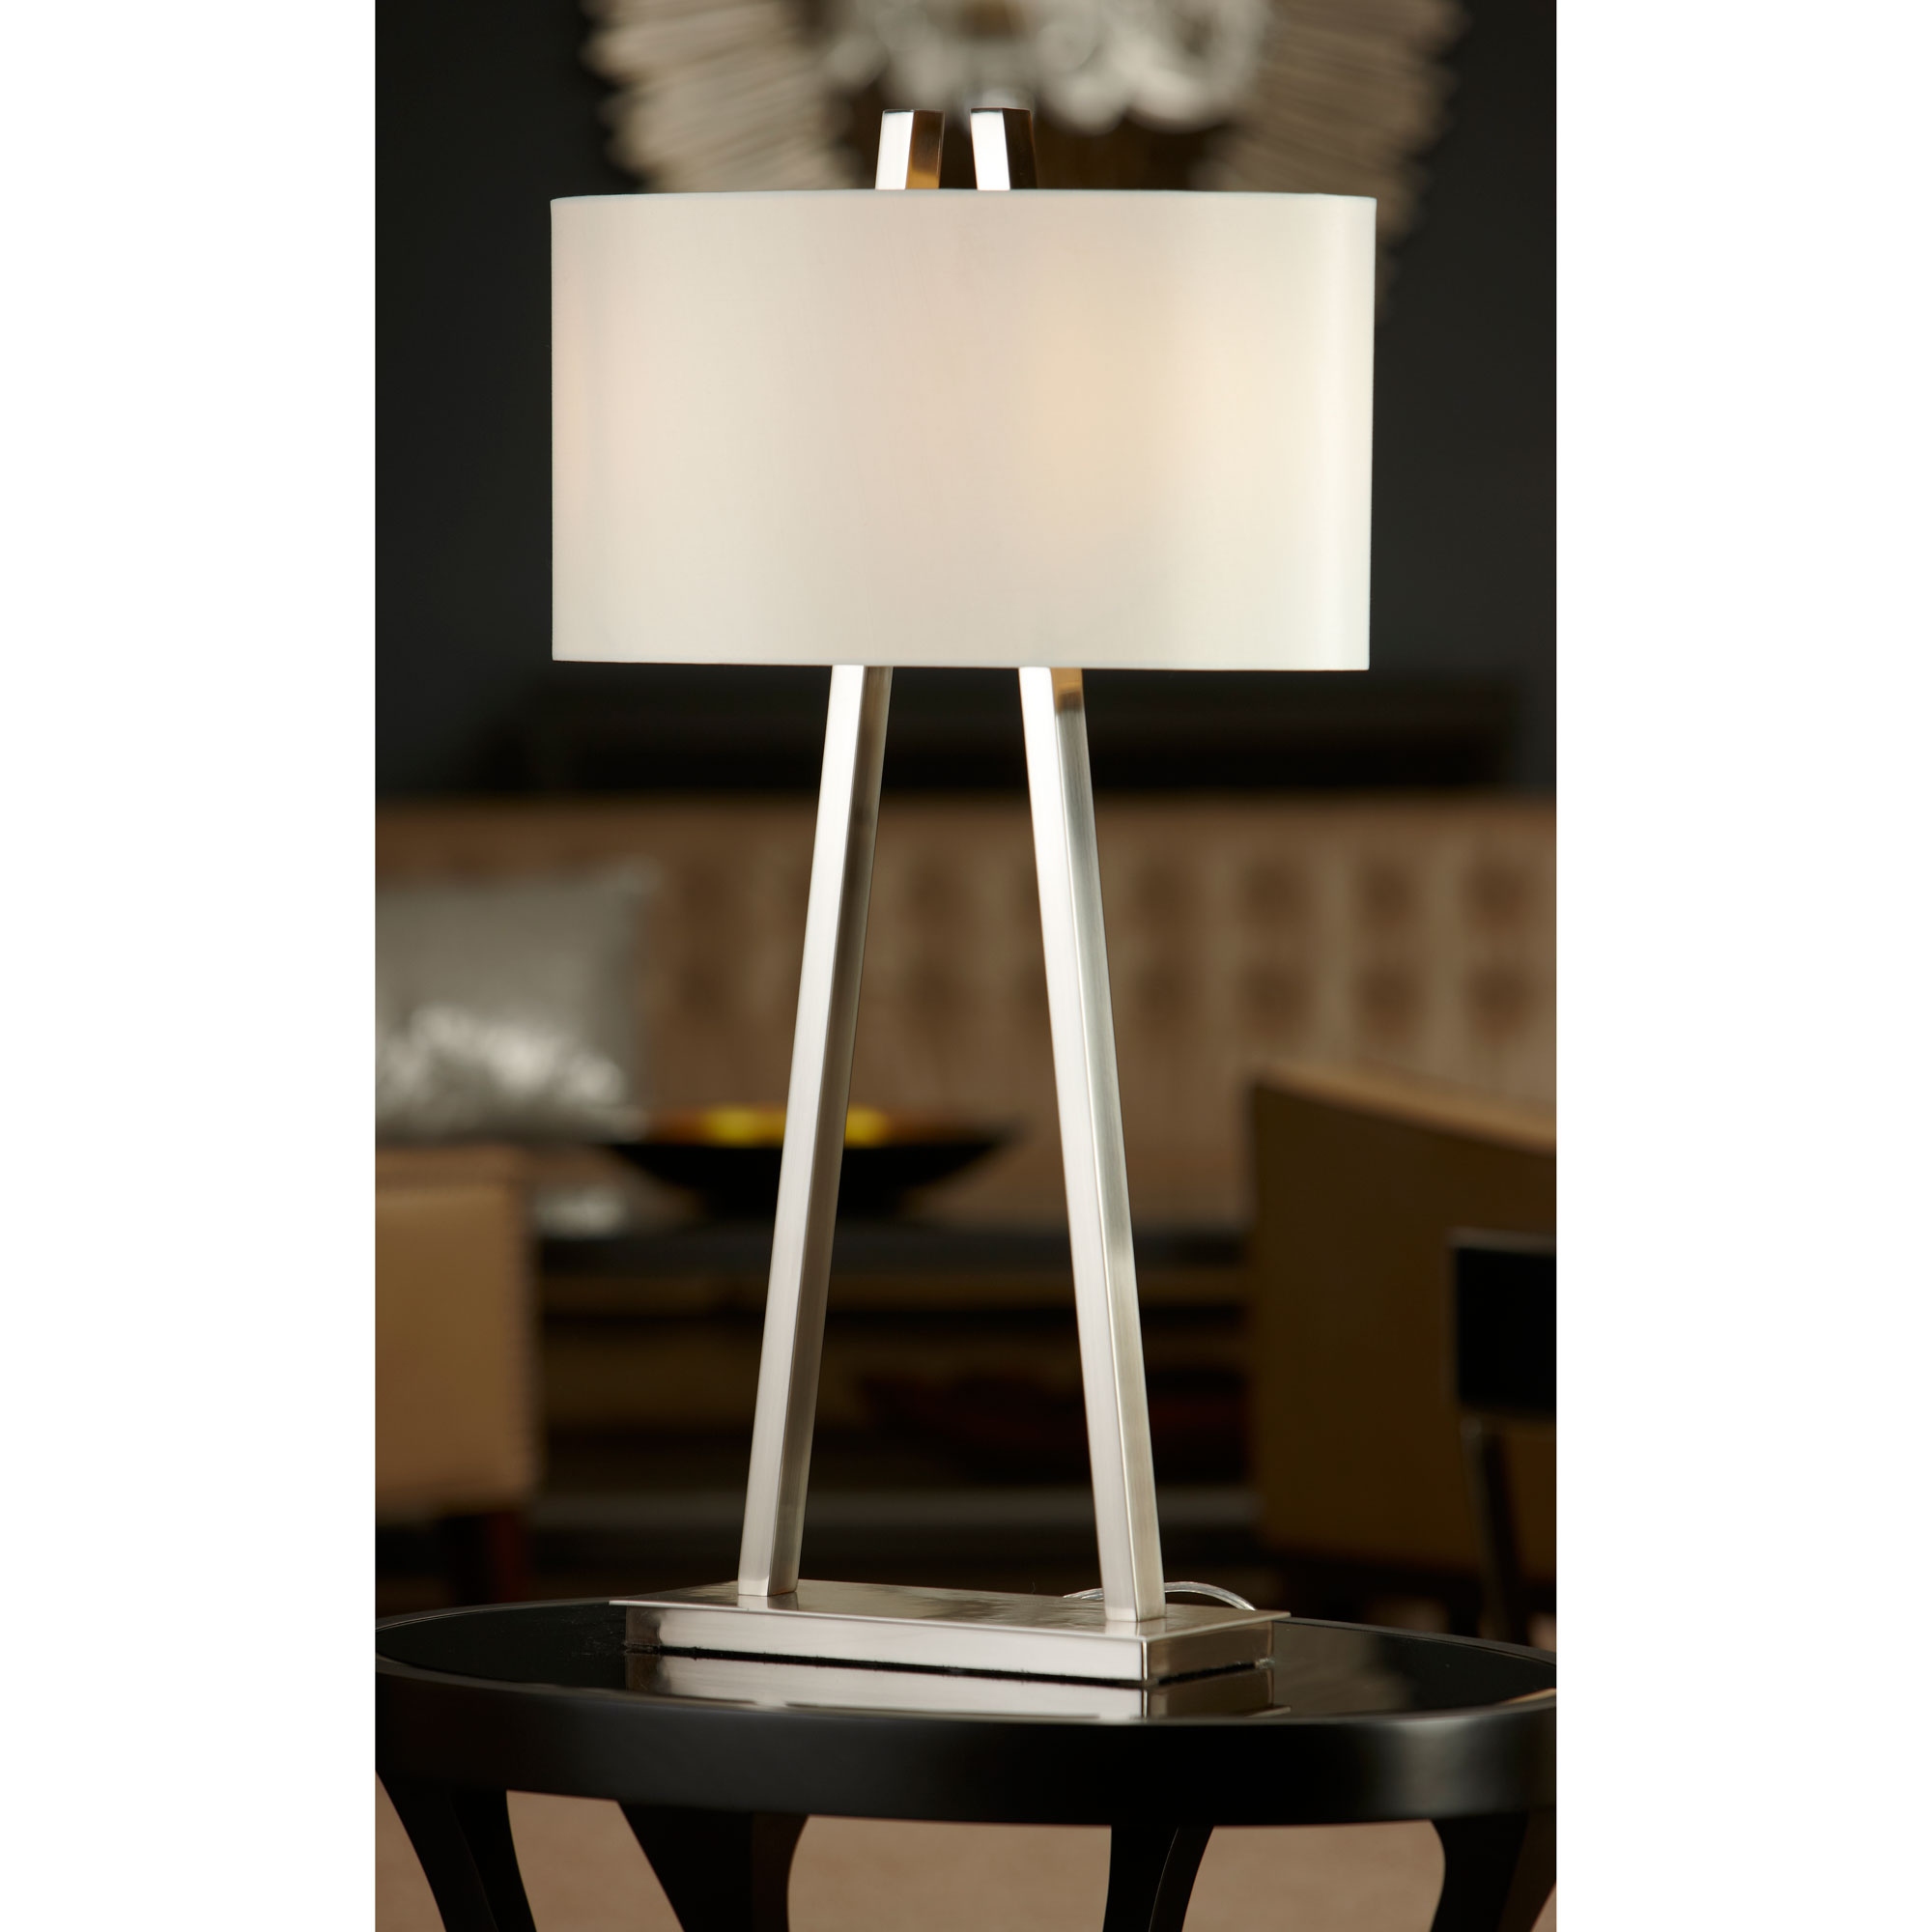 Baxtar Table Lamp brushed nickel table lamp with shade